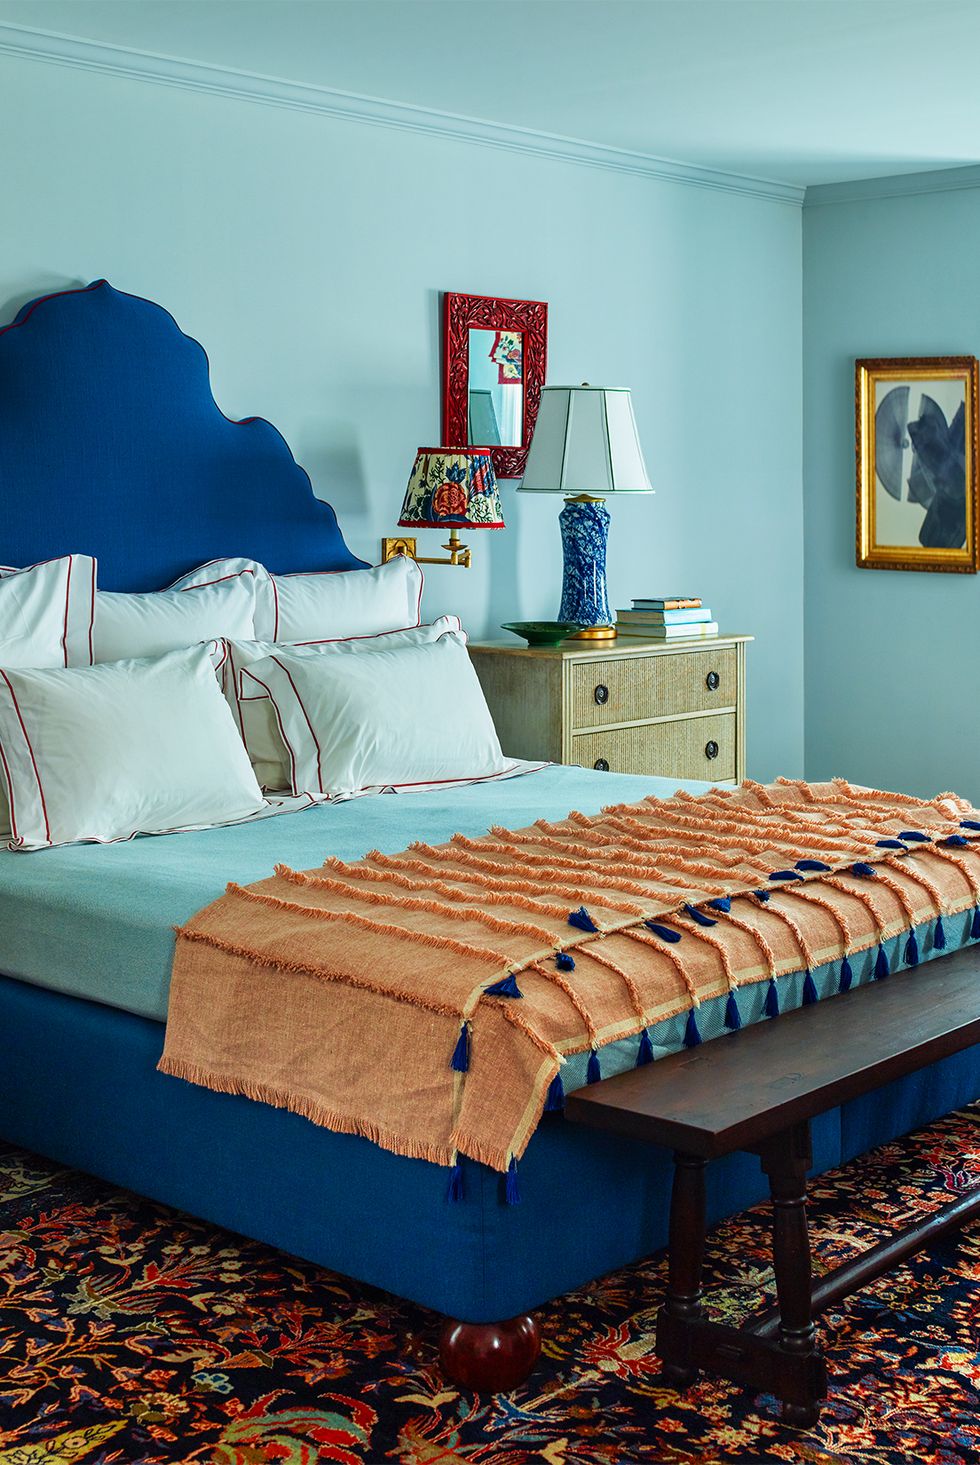 blue painted bedroom